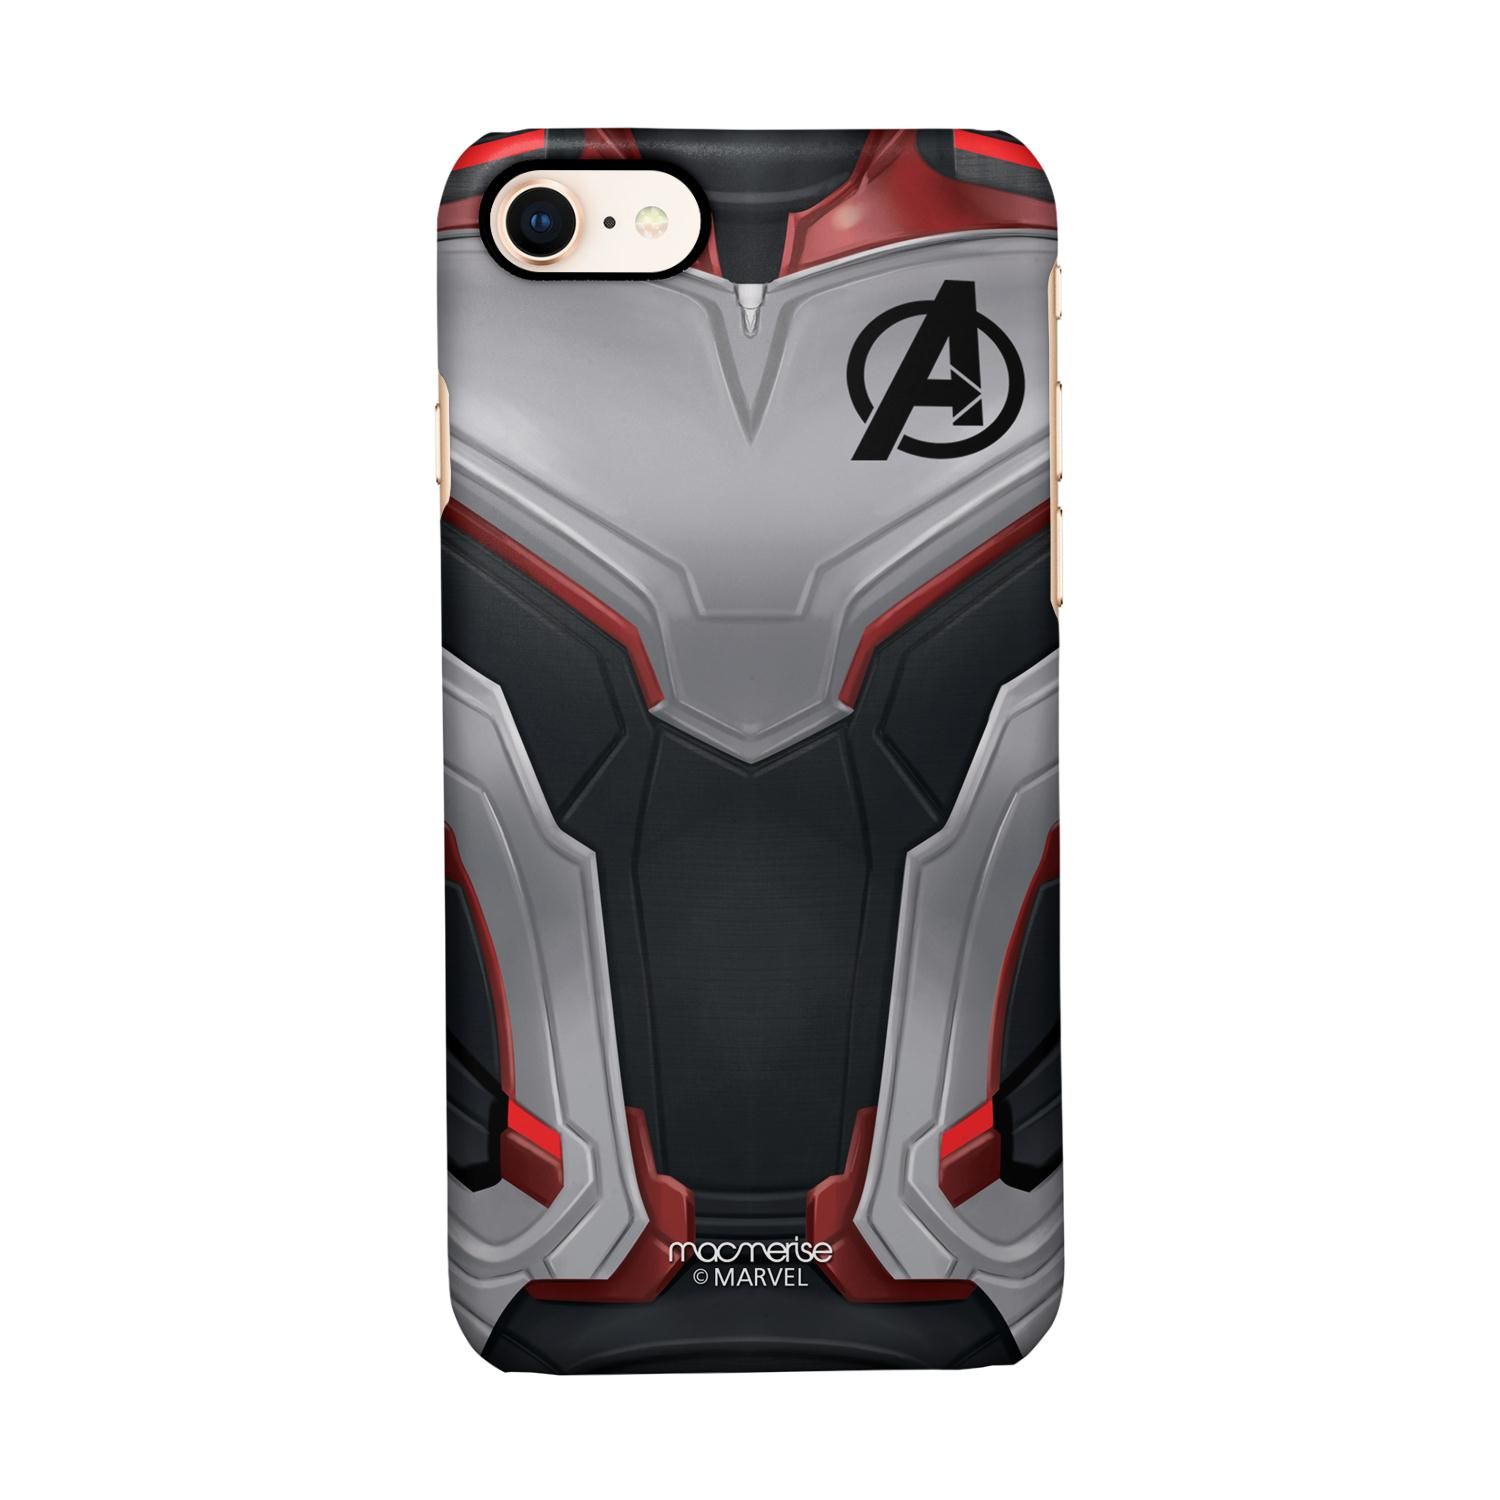 Buy Avengers Endgame Suit - Sleek Phone Case for iPhone 8 Online